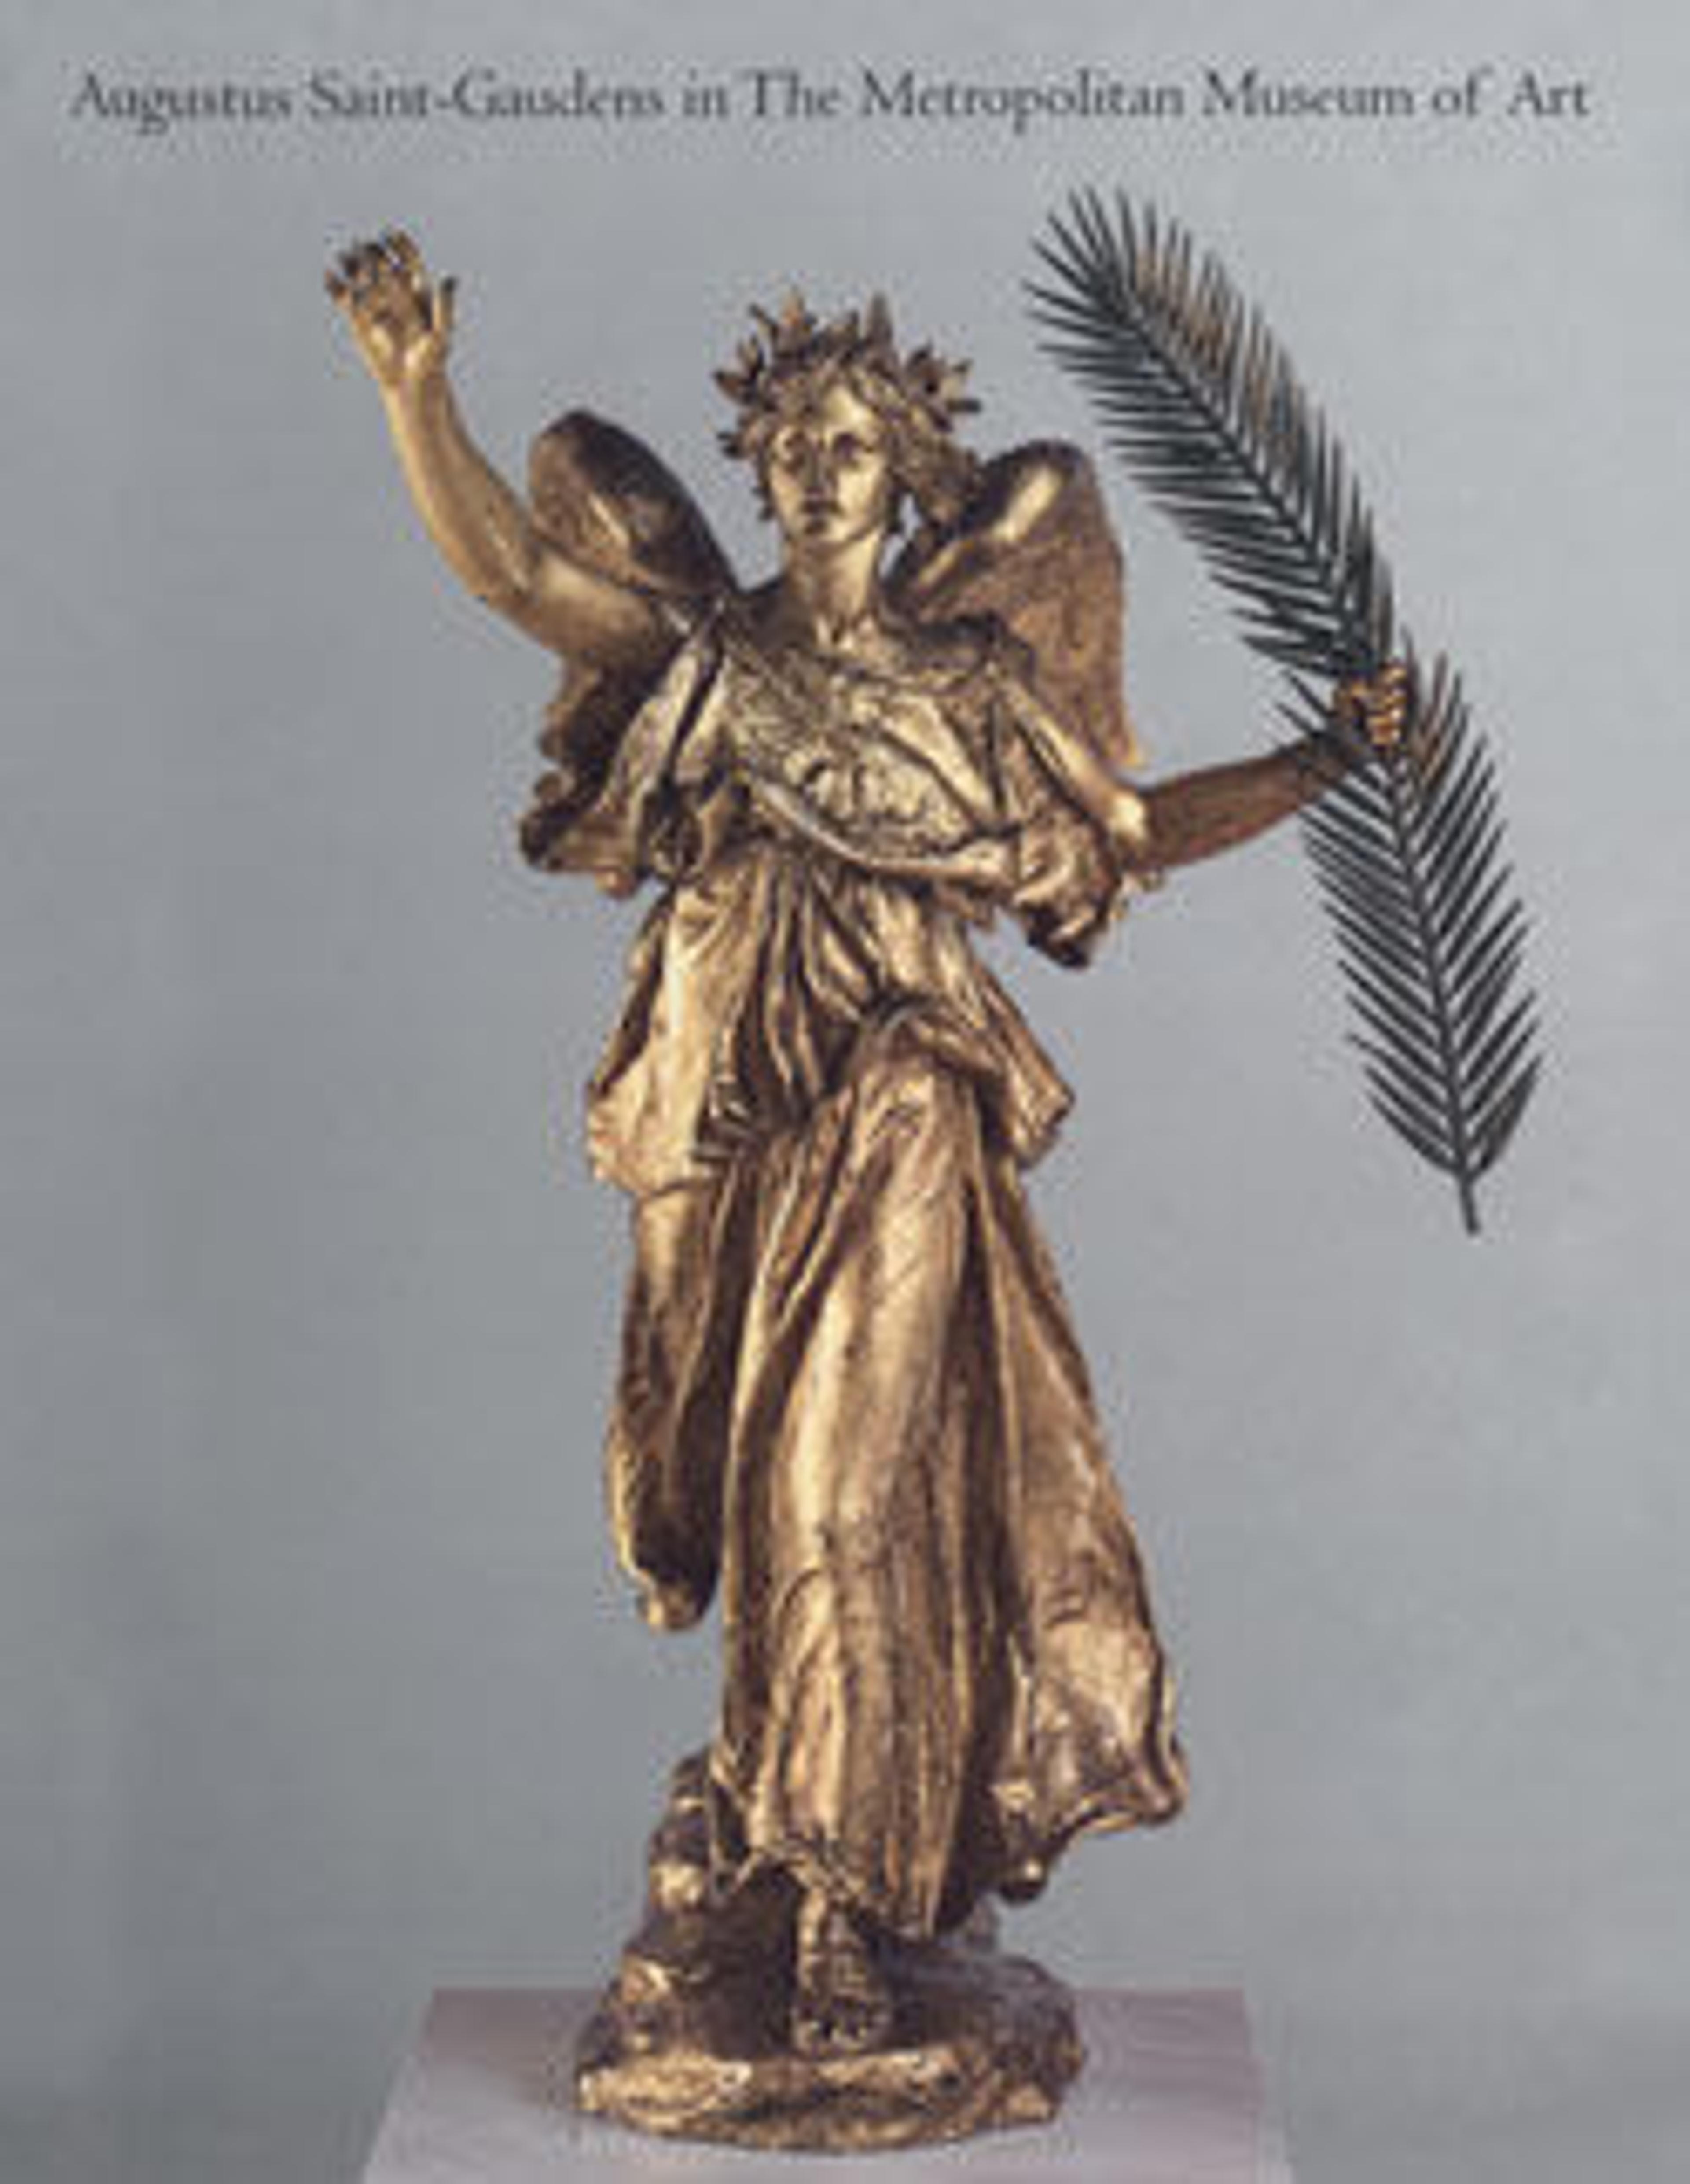 Augustus Saint-Gaudens in The Metropolitan Museum of Art